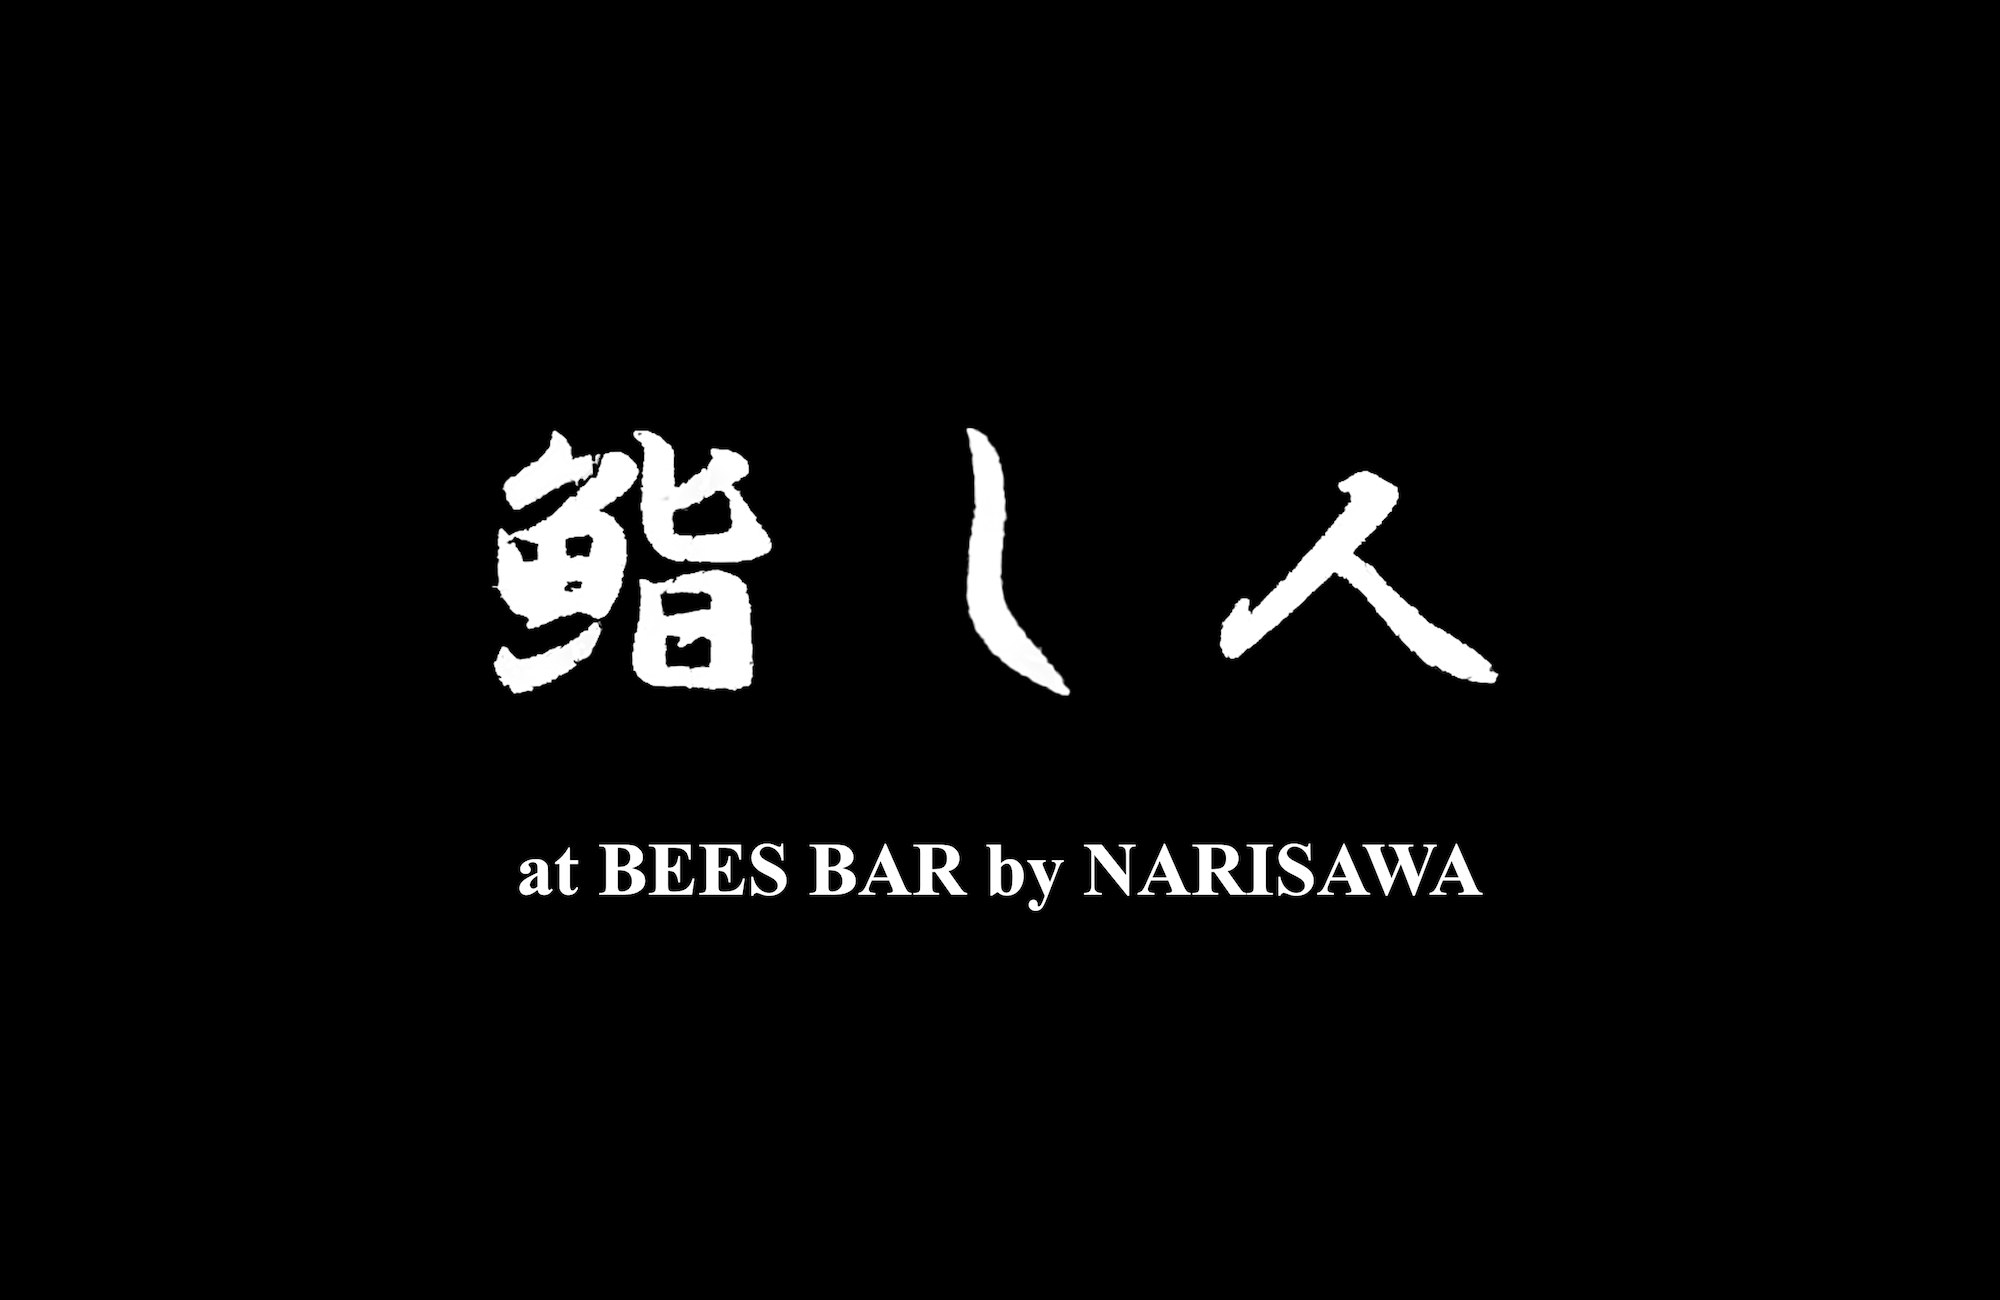 【Finished】Sushijin at BEES BAR by NARISAWA's images1